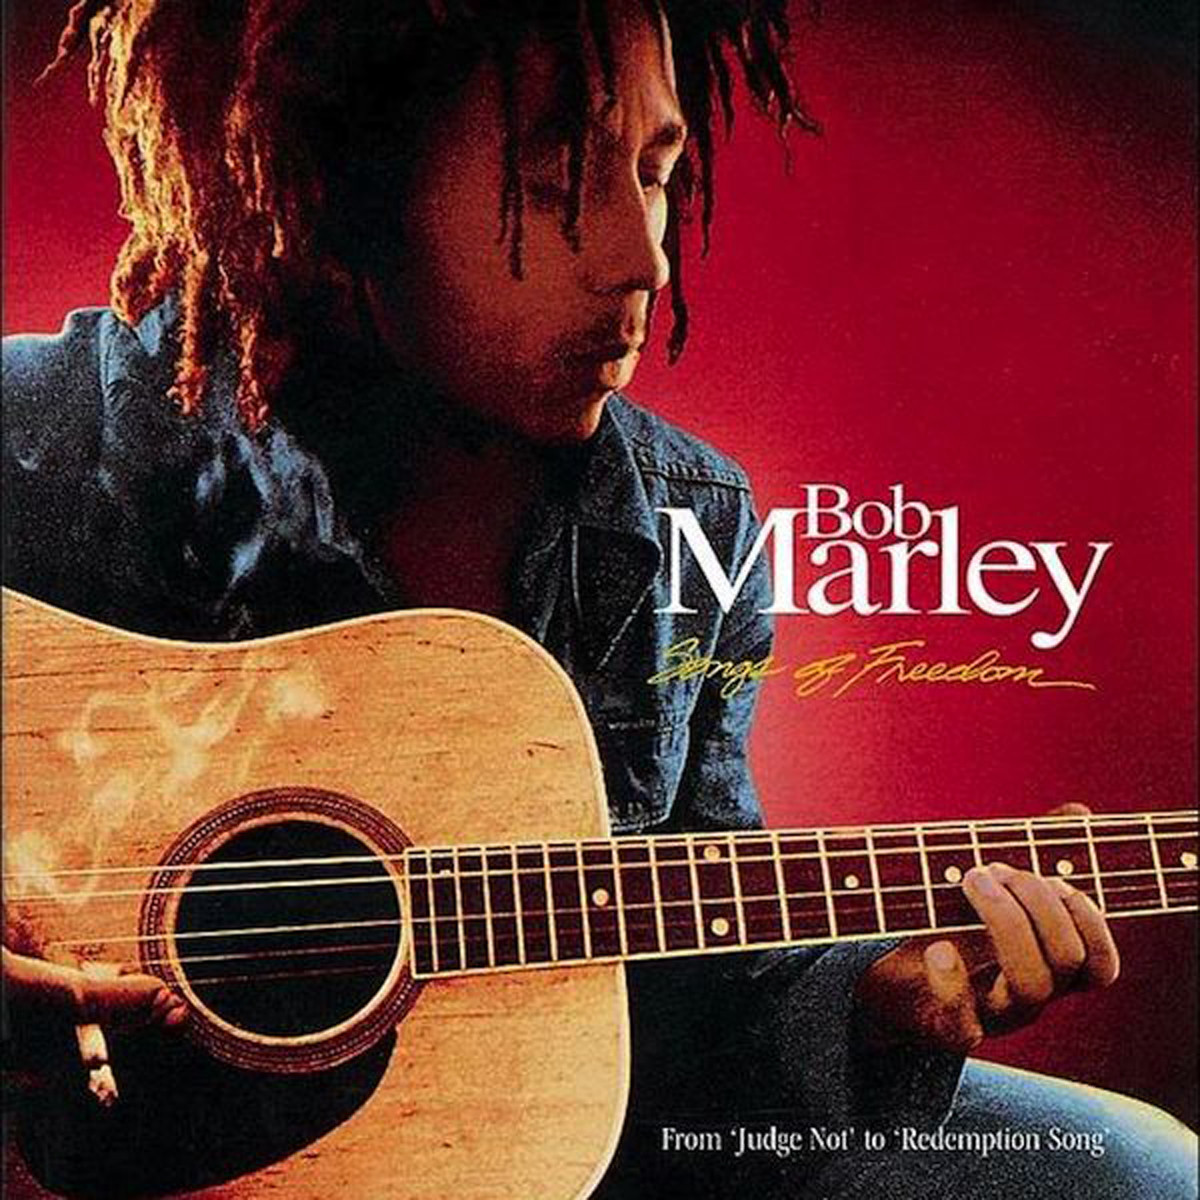 Songs Of Freedom - Bob Marley - VP Reggae